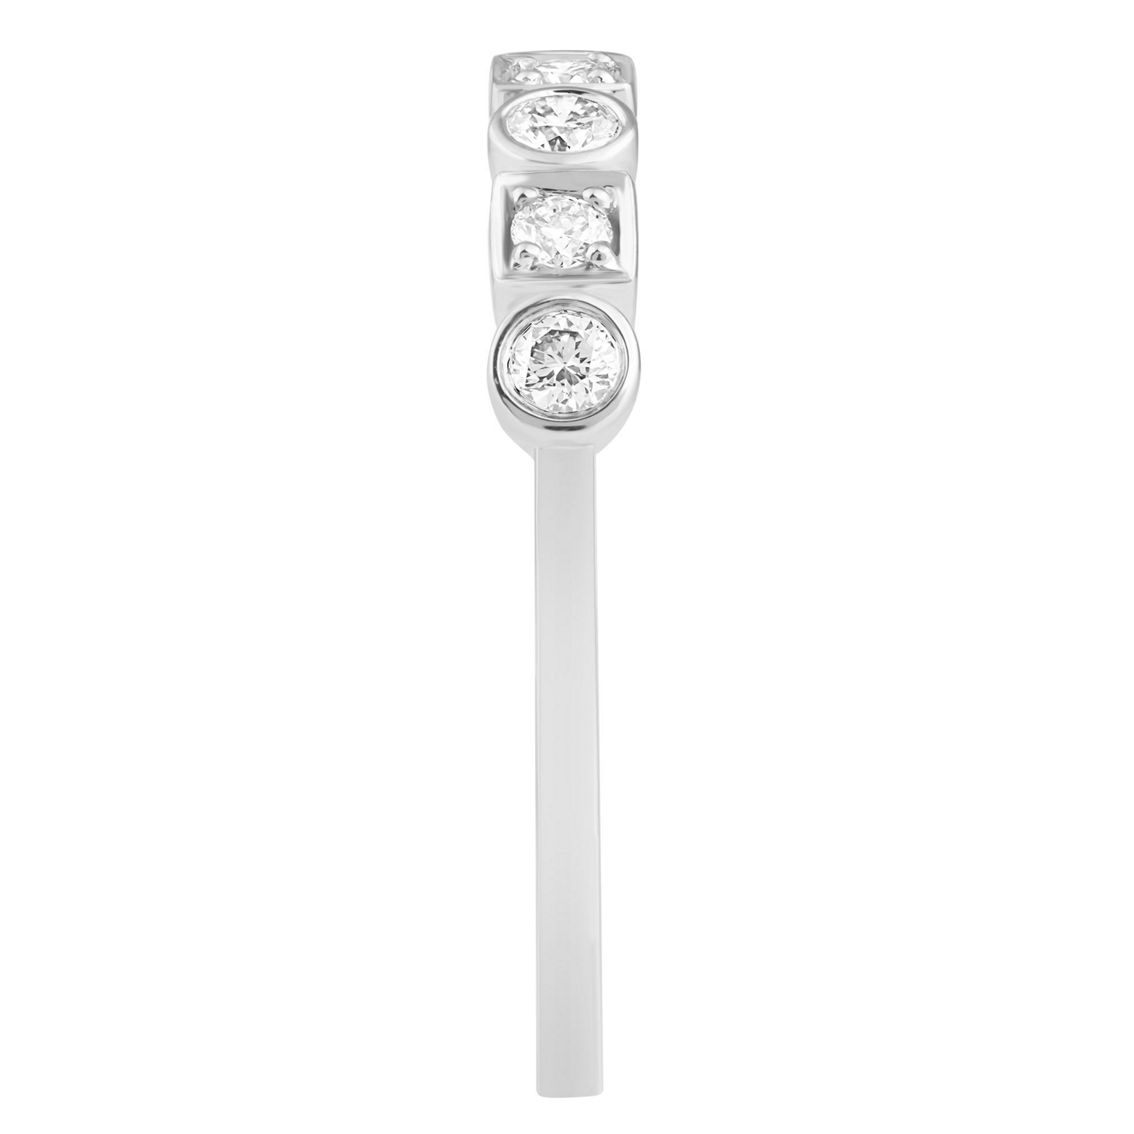 APMG 14K White Gold 1/4 CTW Diamond Bezel & Prong Link Ring - Image 4 of 4